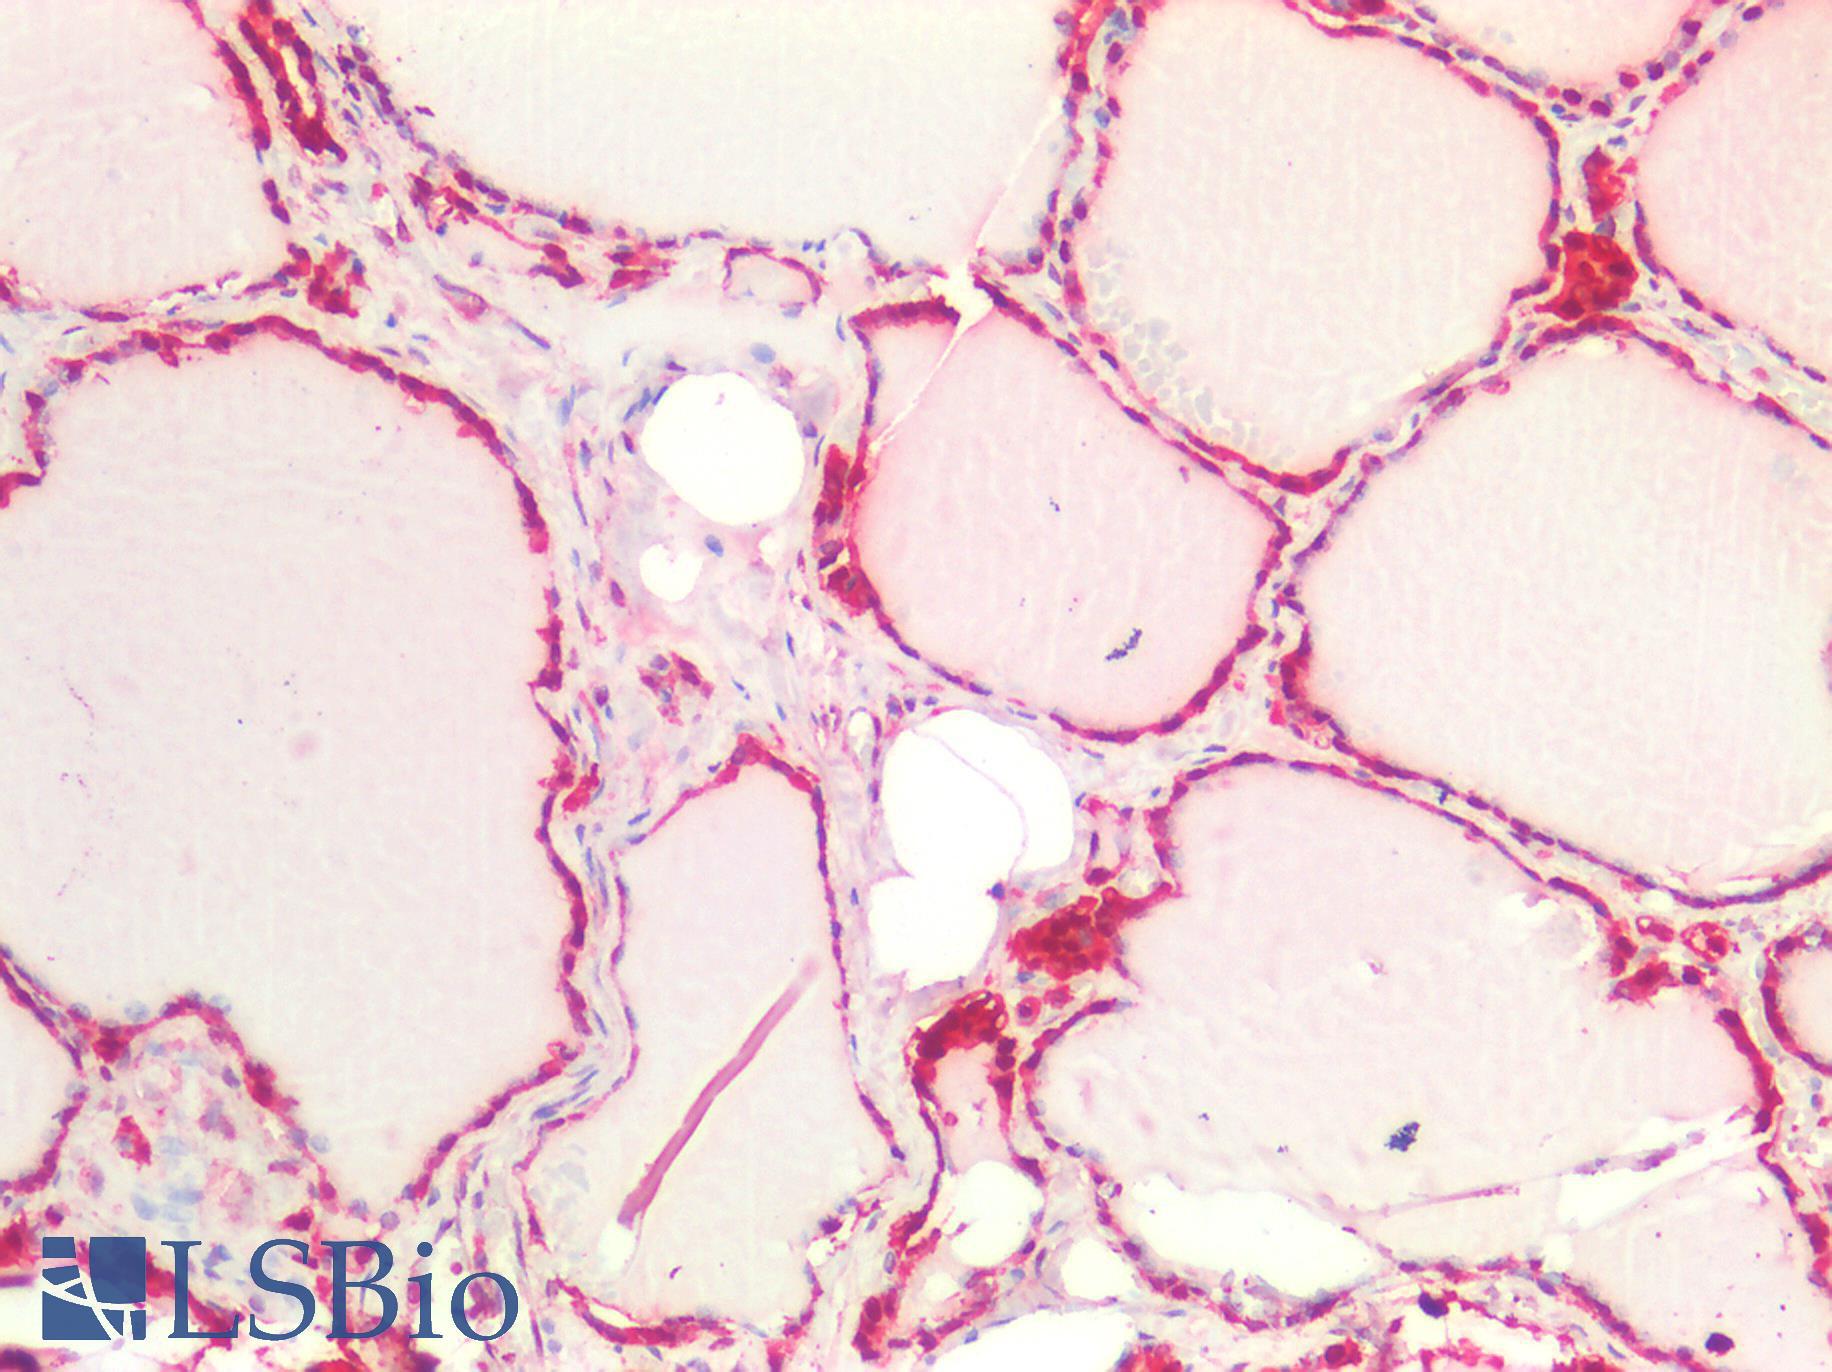 GSTP1 / GST Pi Antibody - Human Thyroid: Formalin-Fixed, Paraffin-Embedded (FFPE)